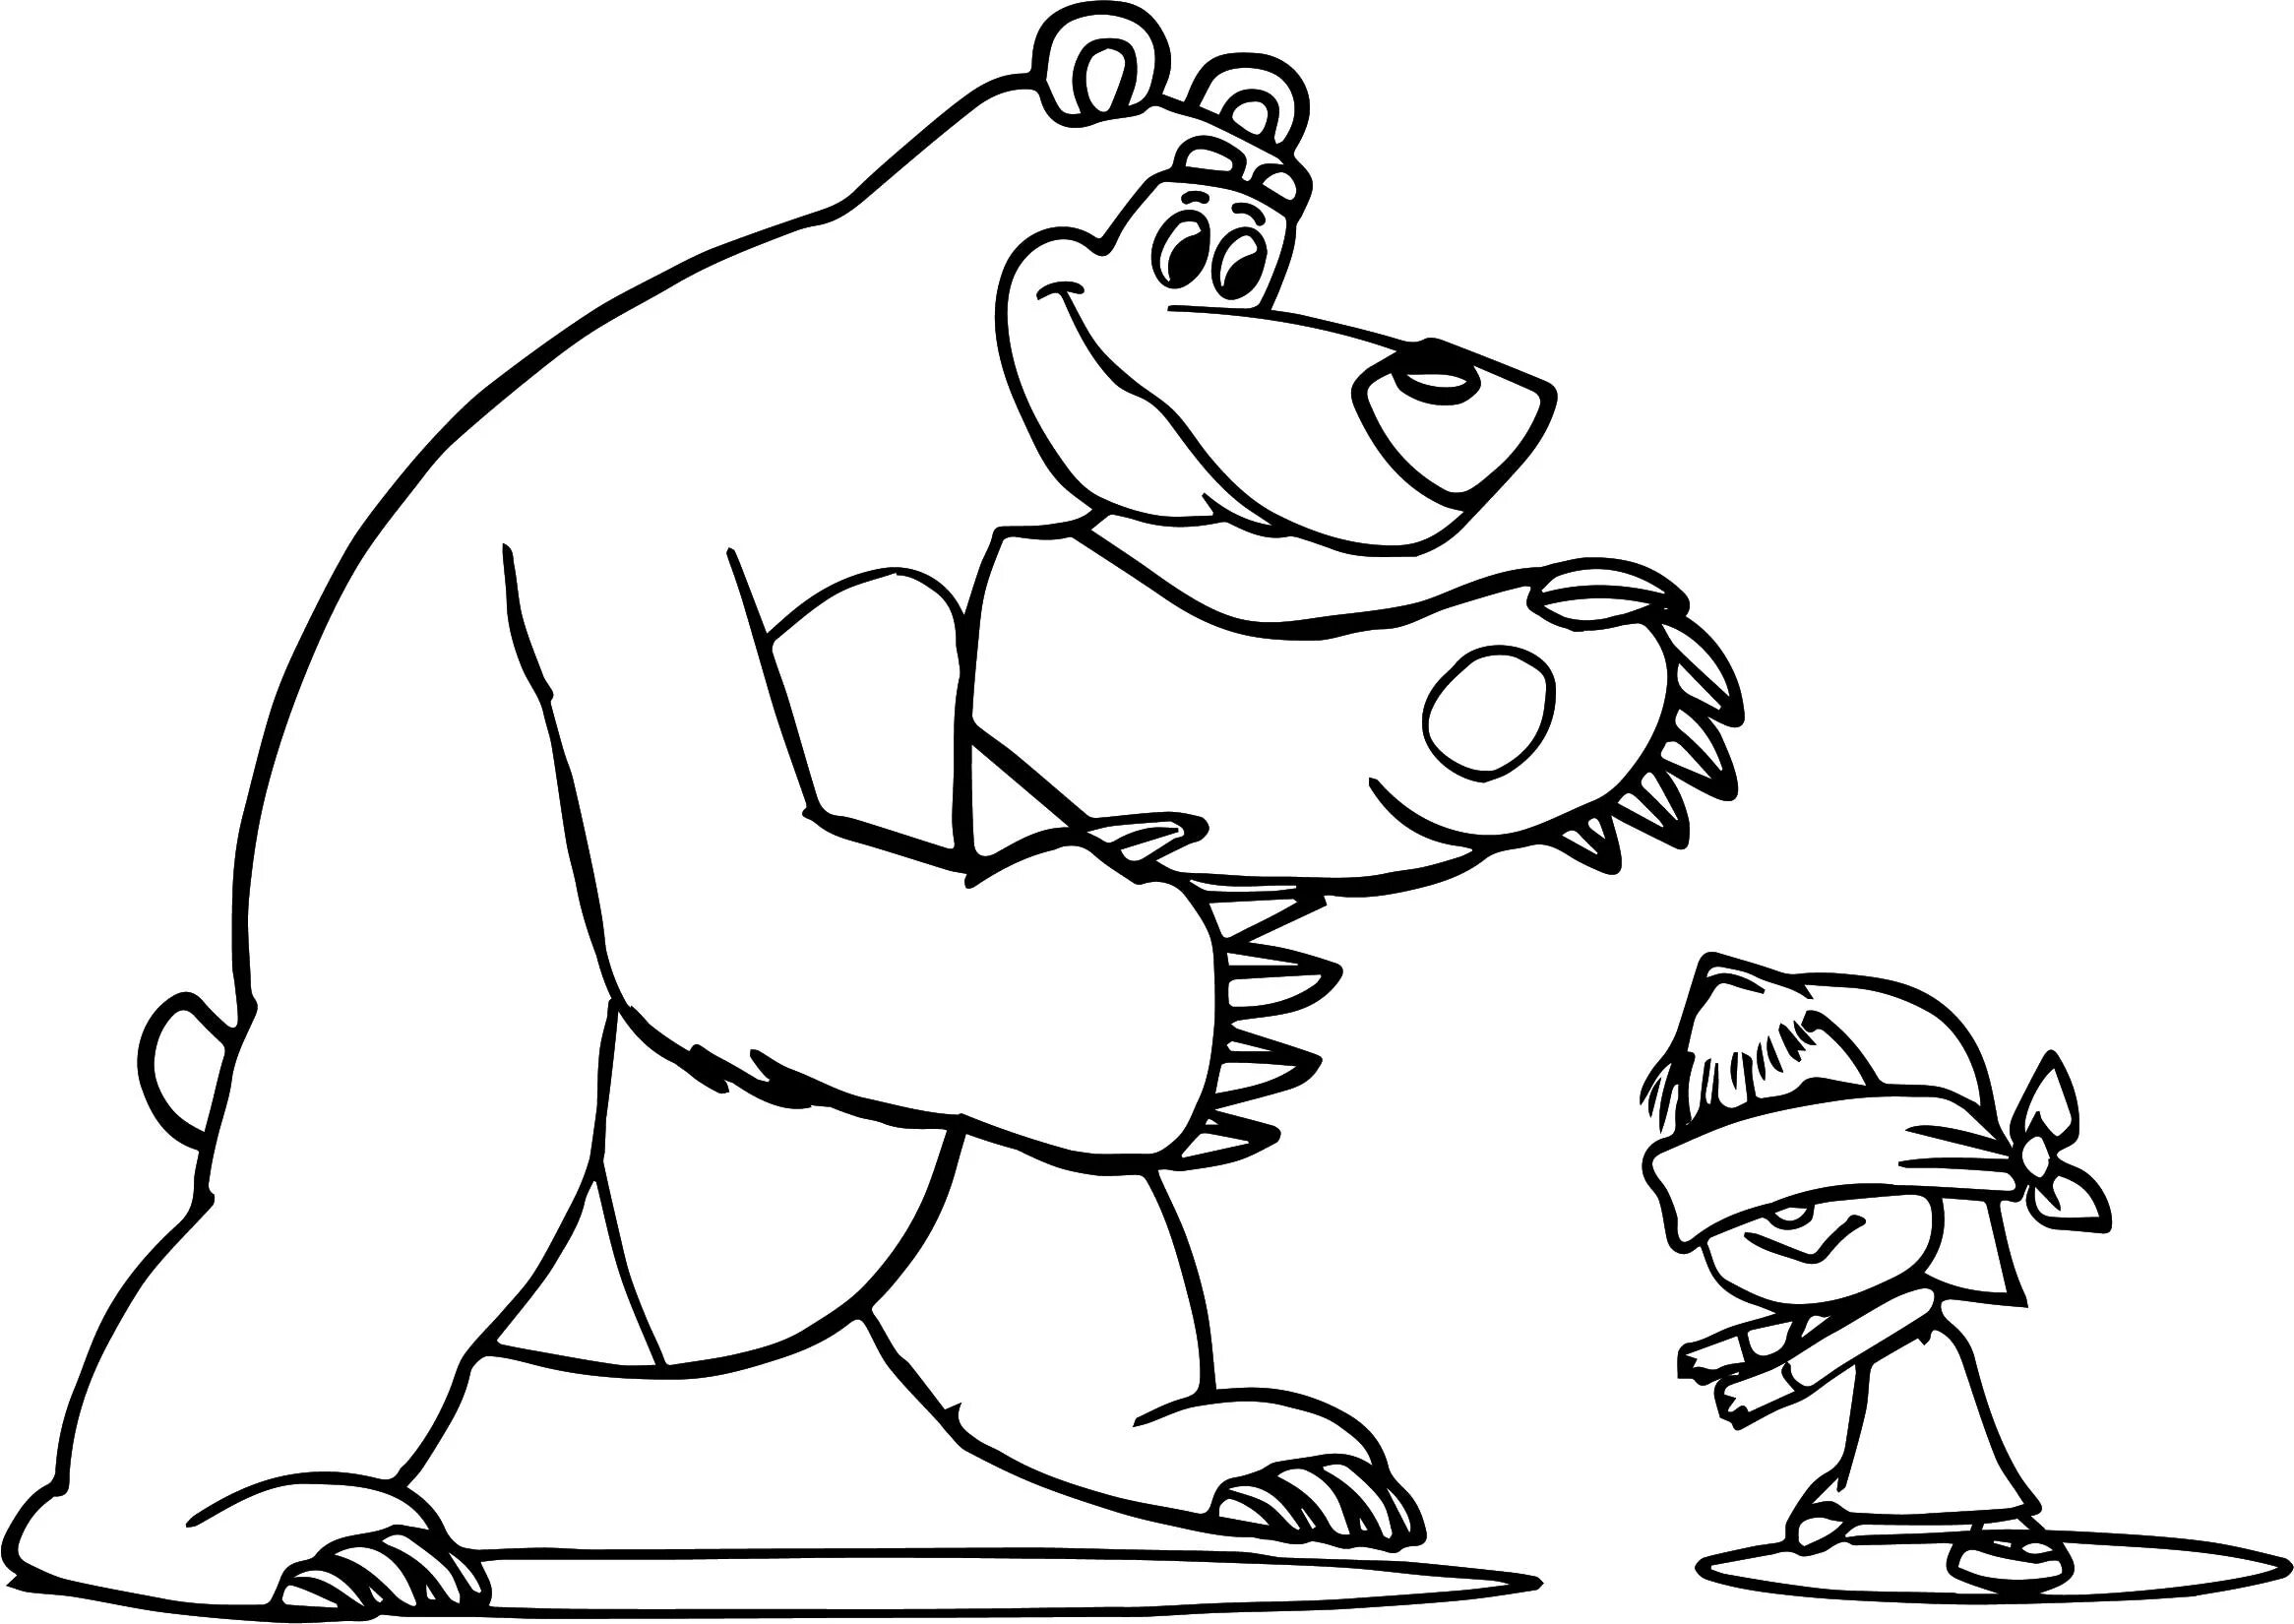 Masha and the bear coloring game